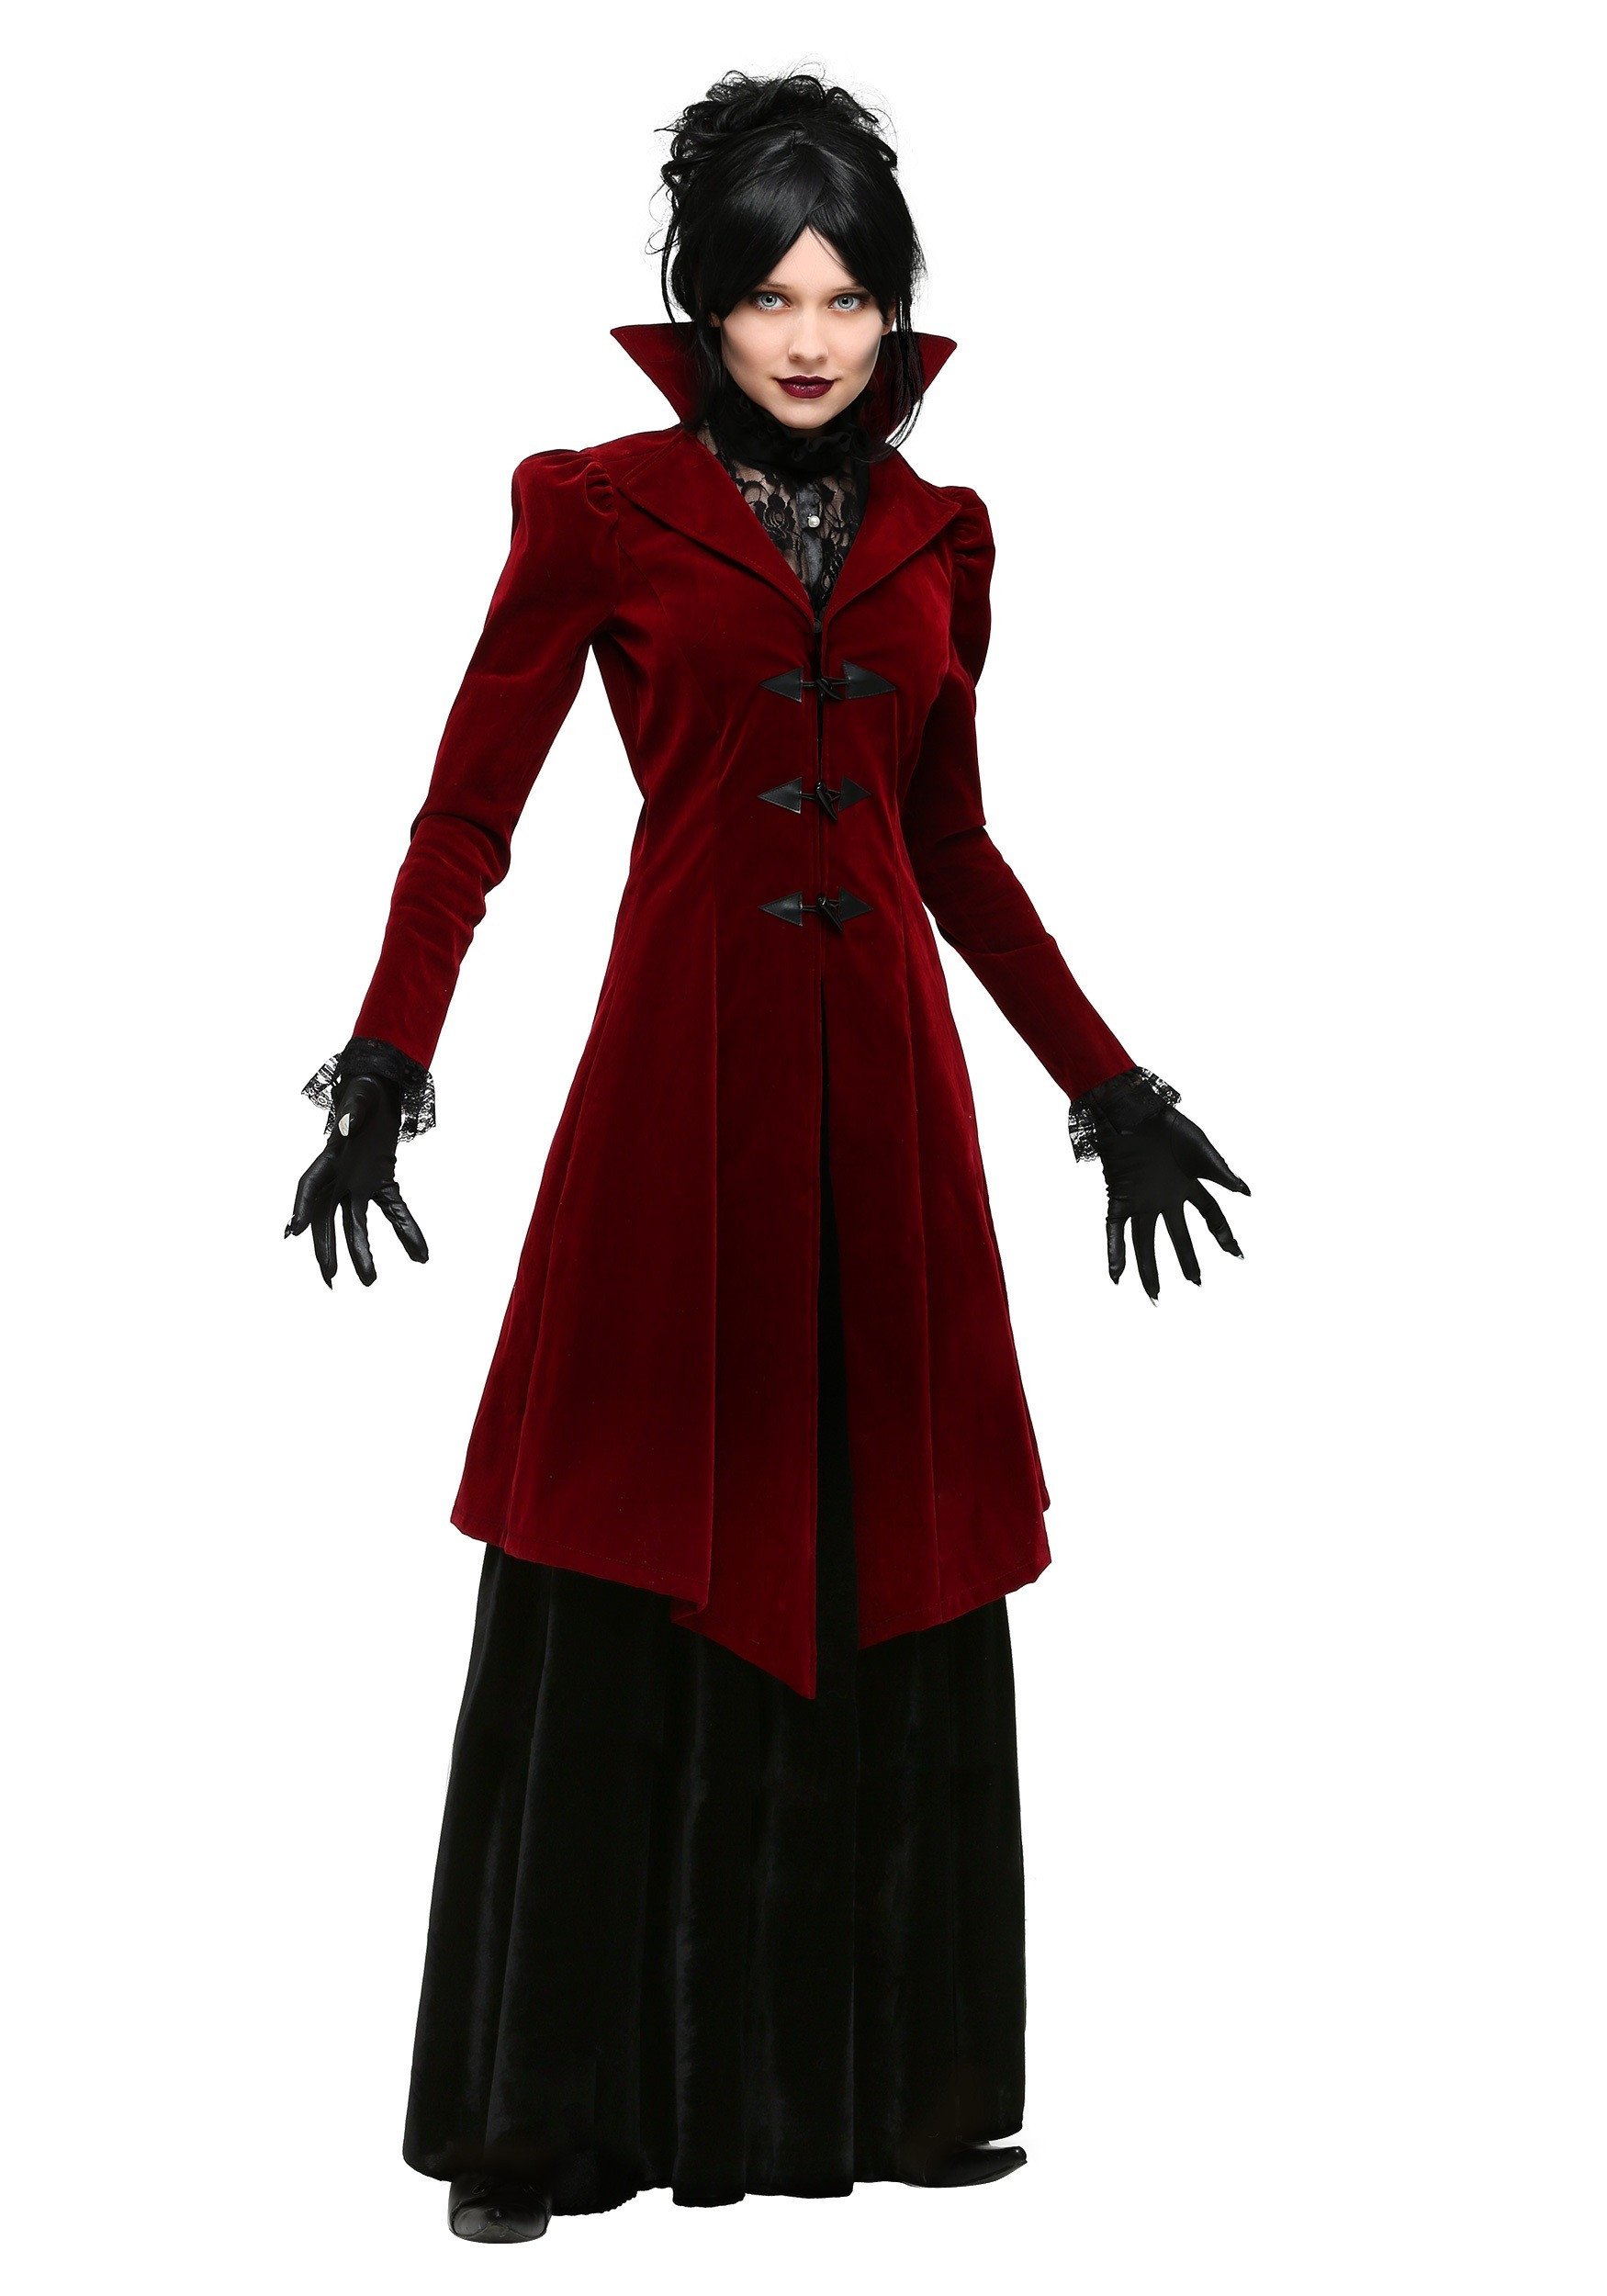 Plus Size Halloween Costume Ideas
 Women s Plus Size Delightfully Dreadful Vampiress Costume